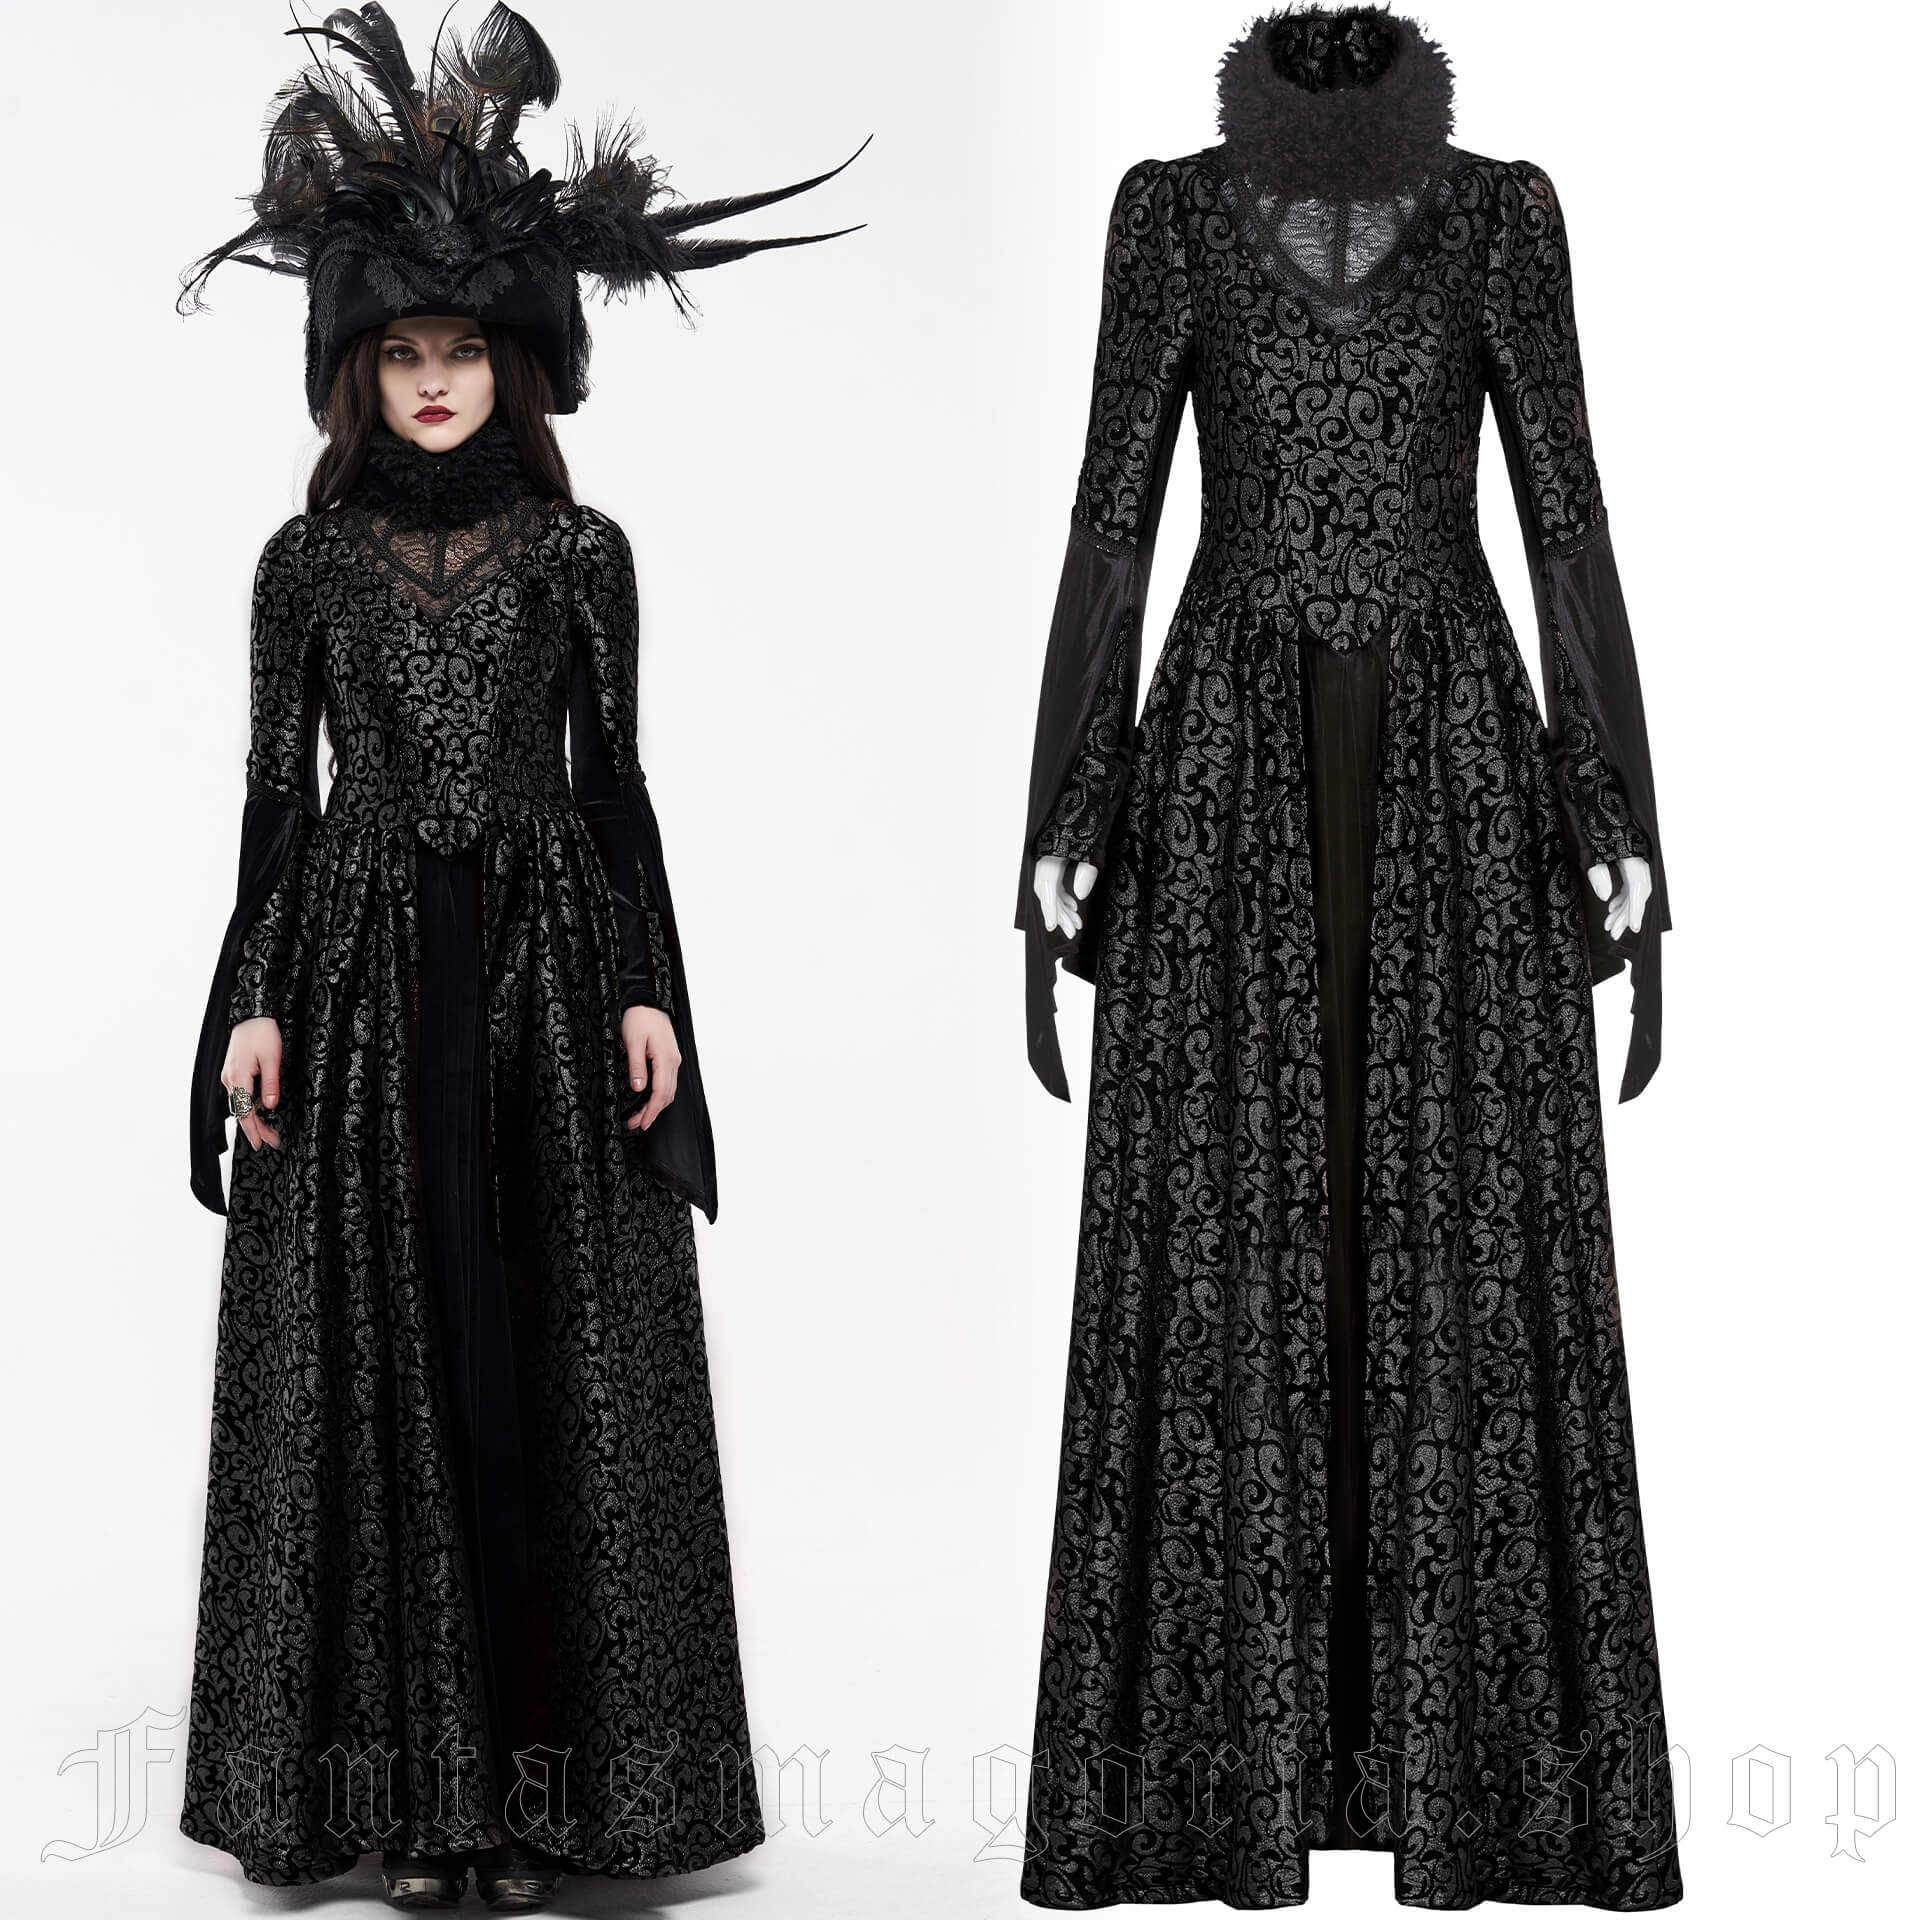 Gothic Diva Black Dress - Punk Rave - WQ-487/BK 1